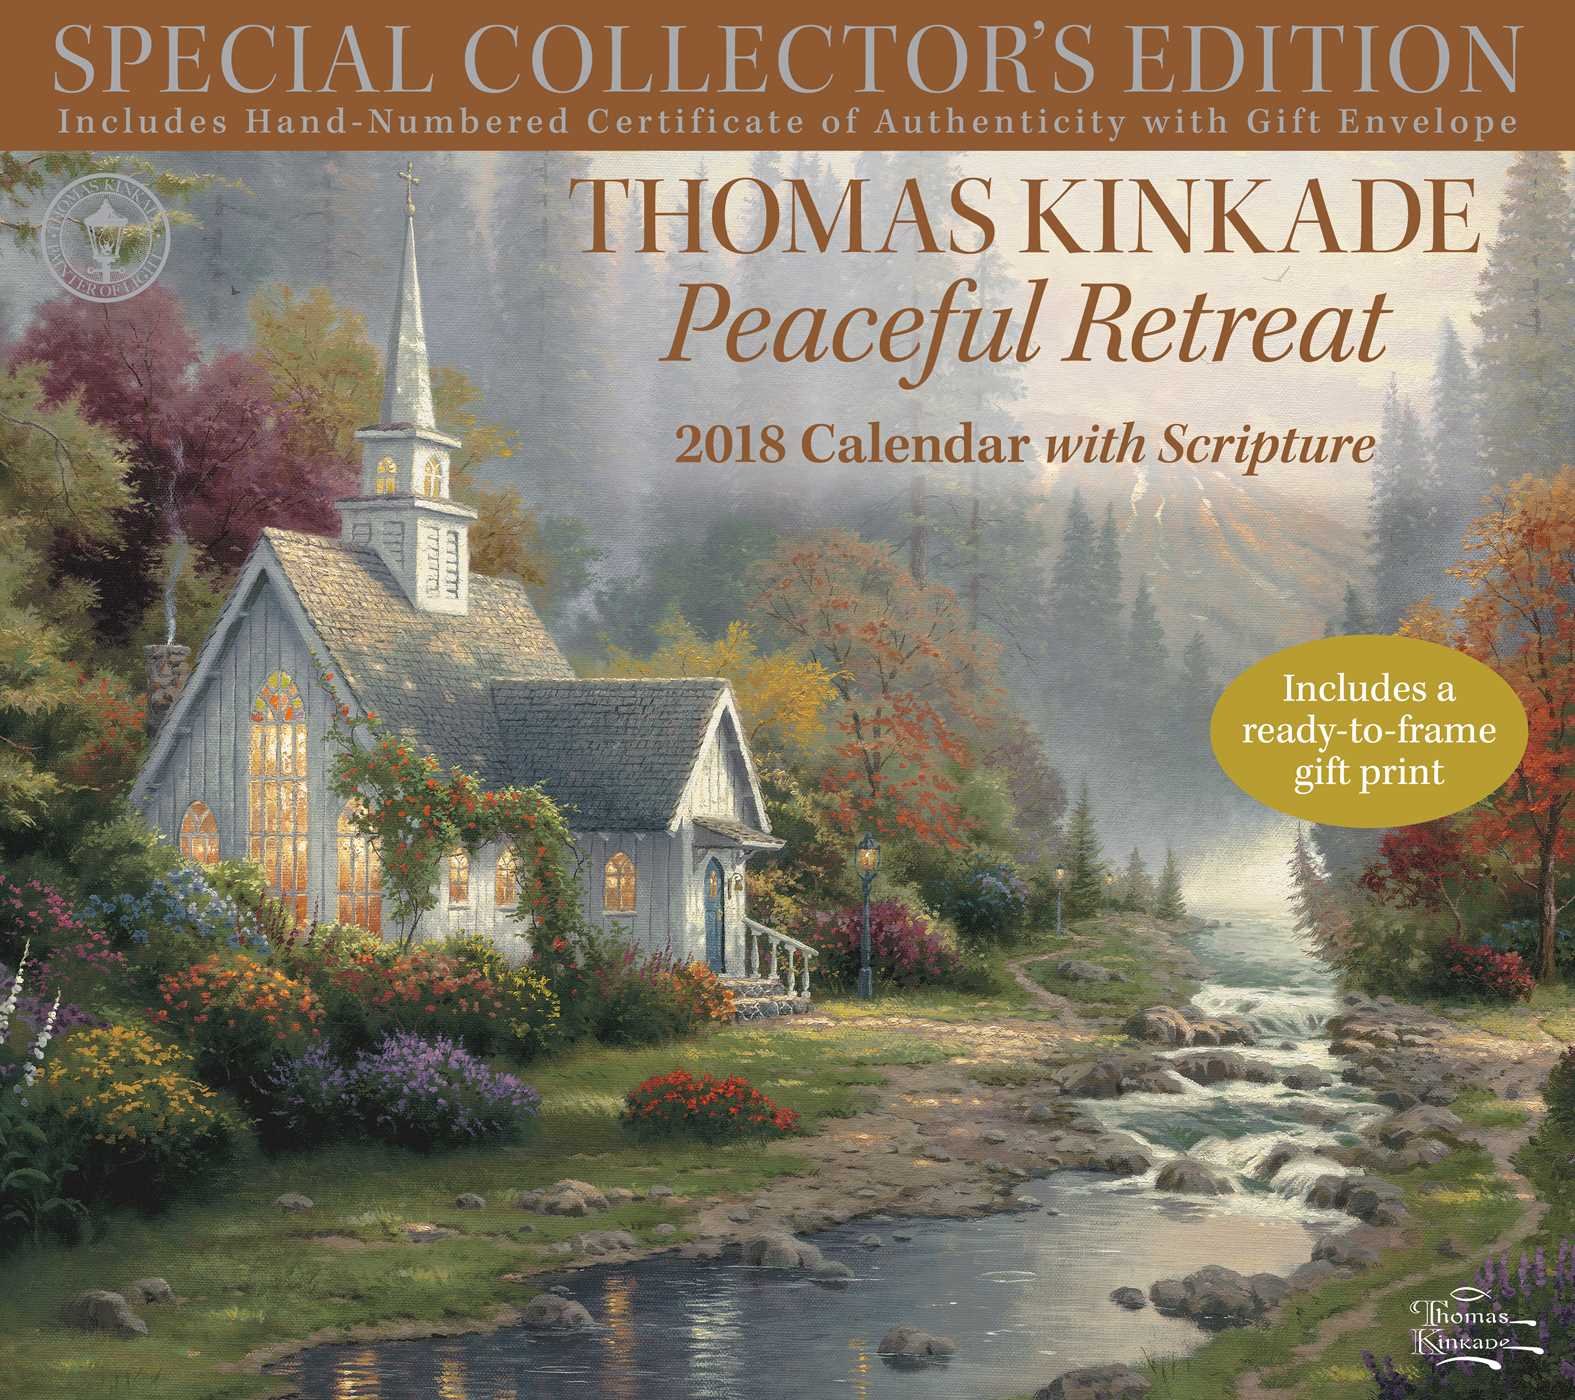 Amazon.com: Thomas Kinkade Special Collector's Edition with ...